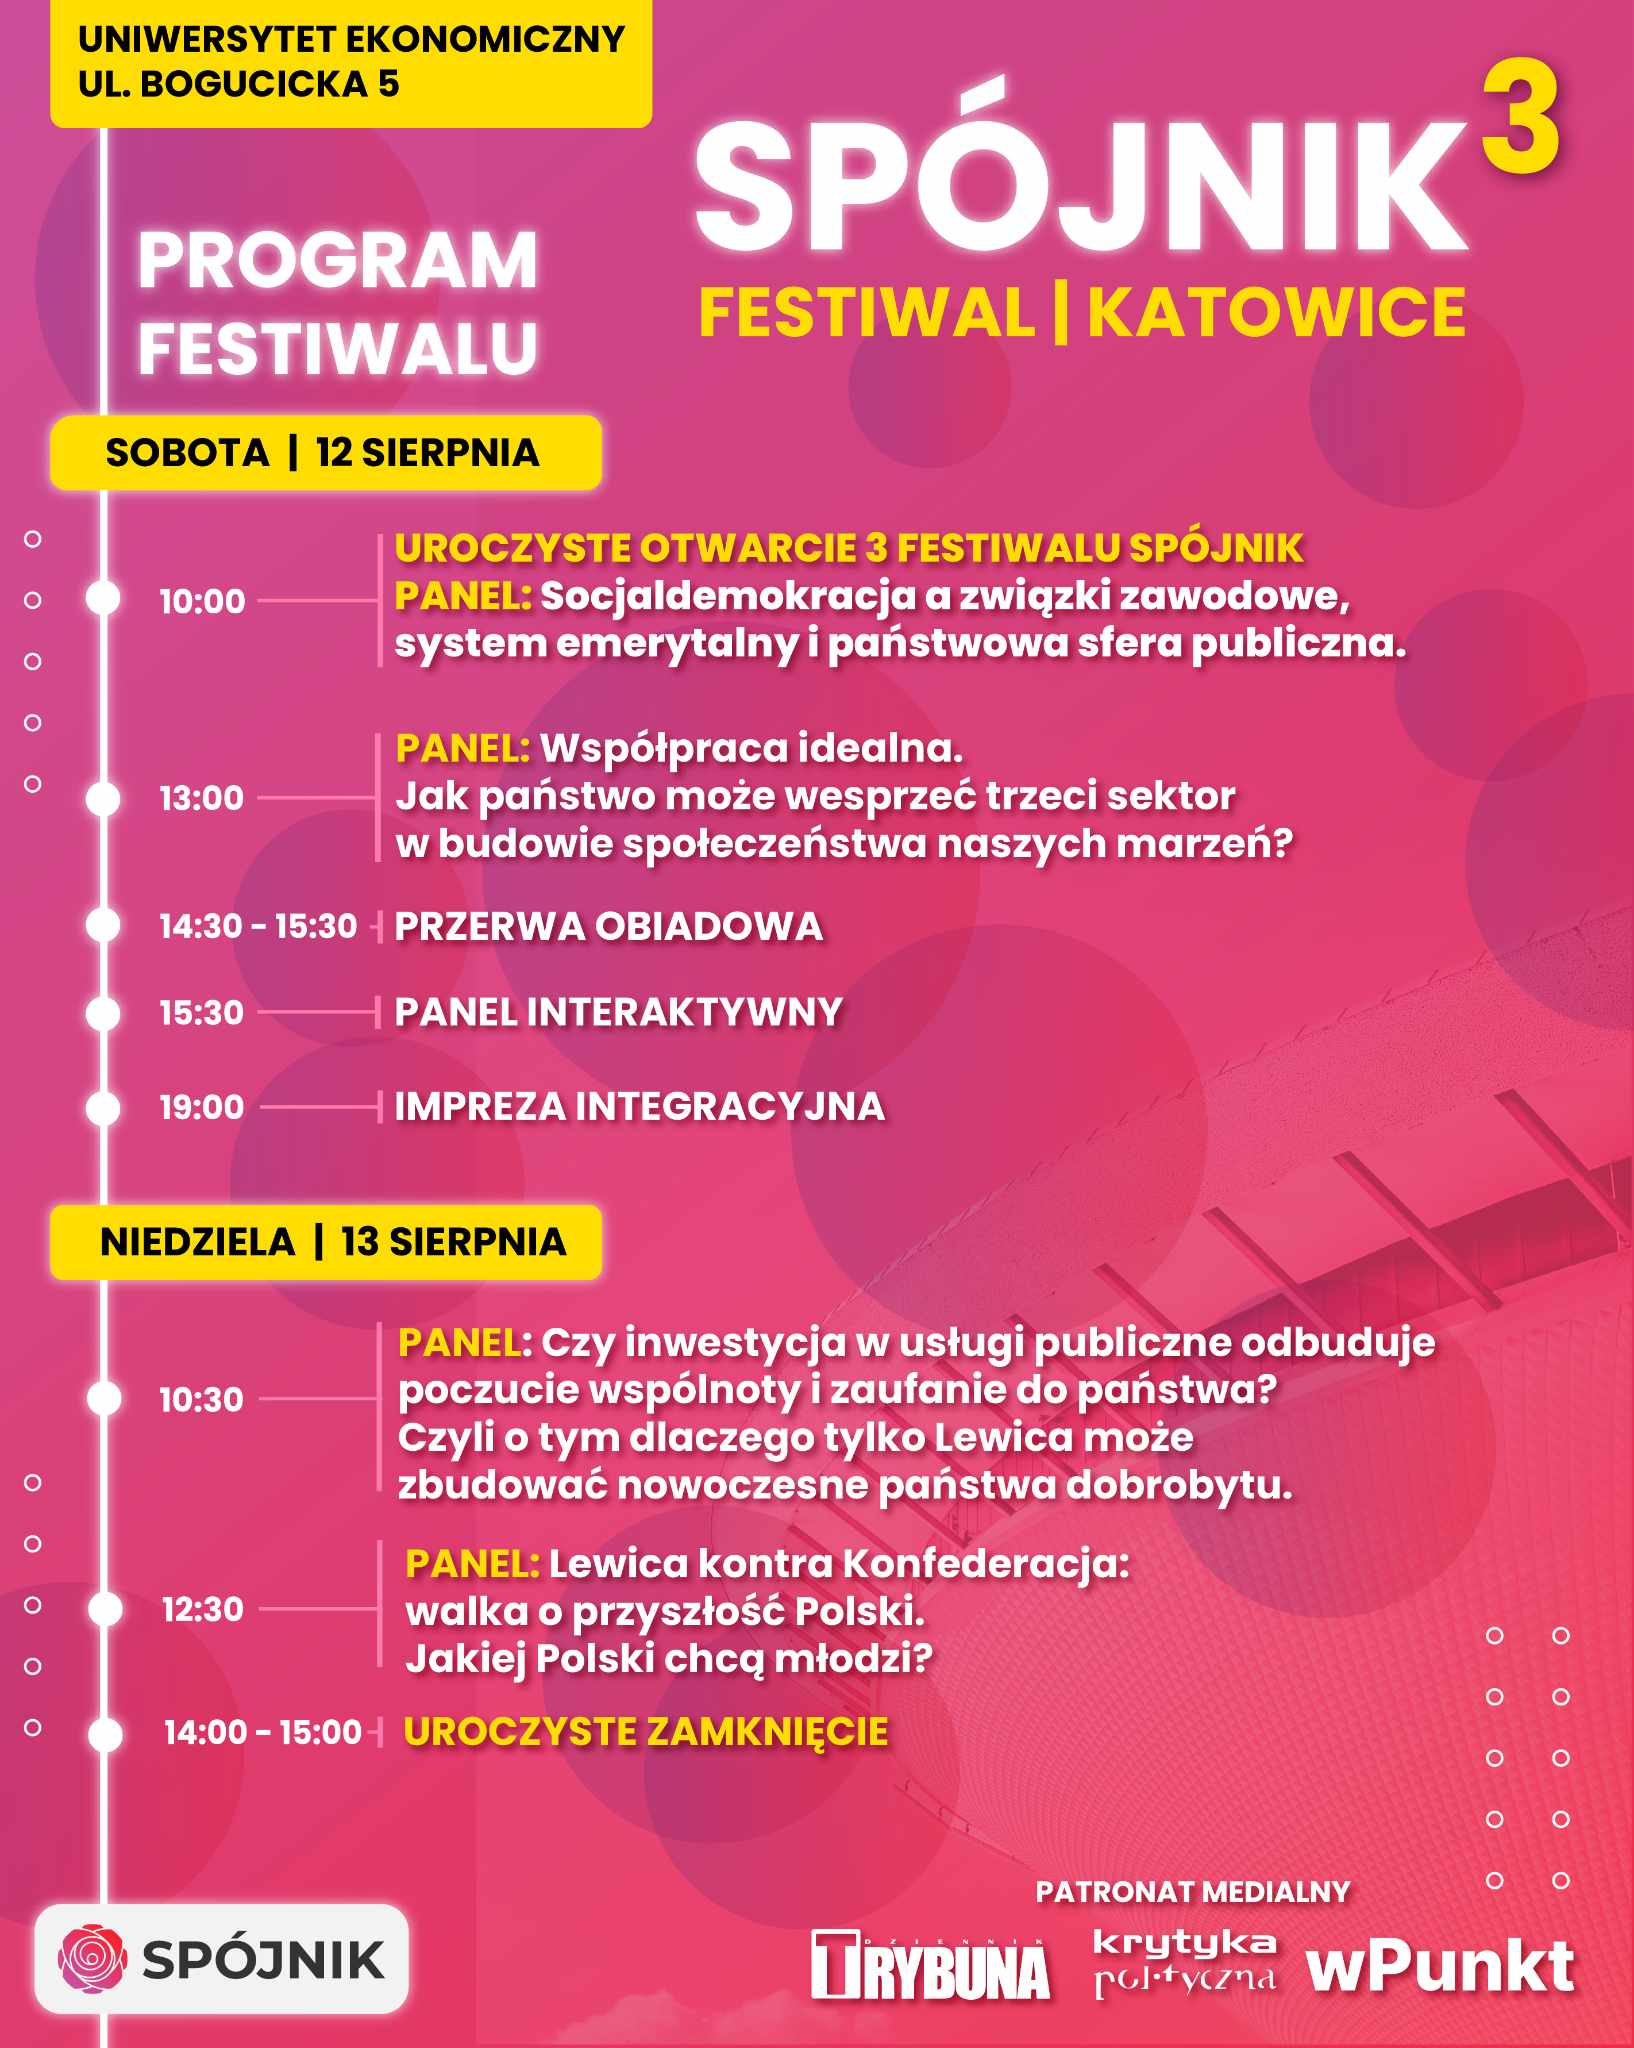 Program Festiwalu Spójnika